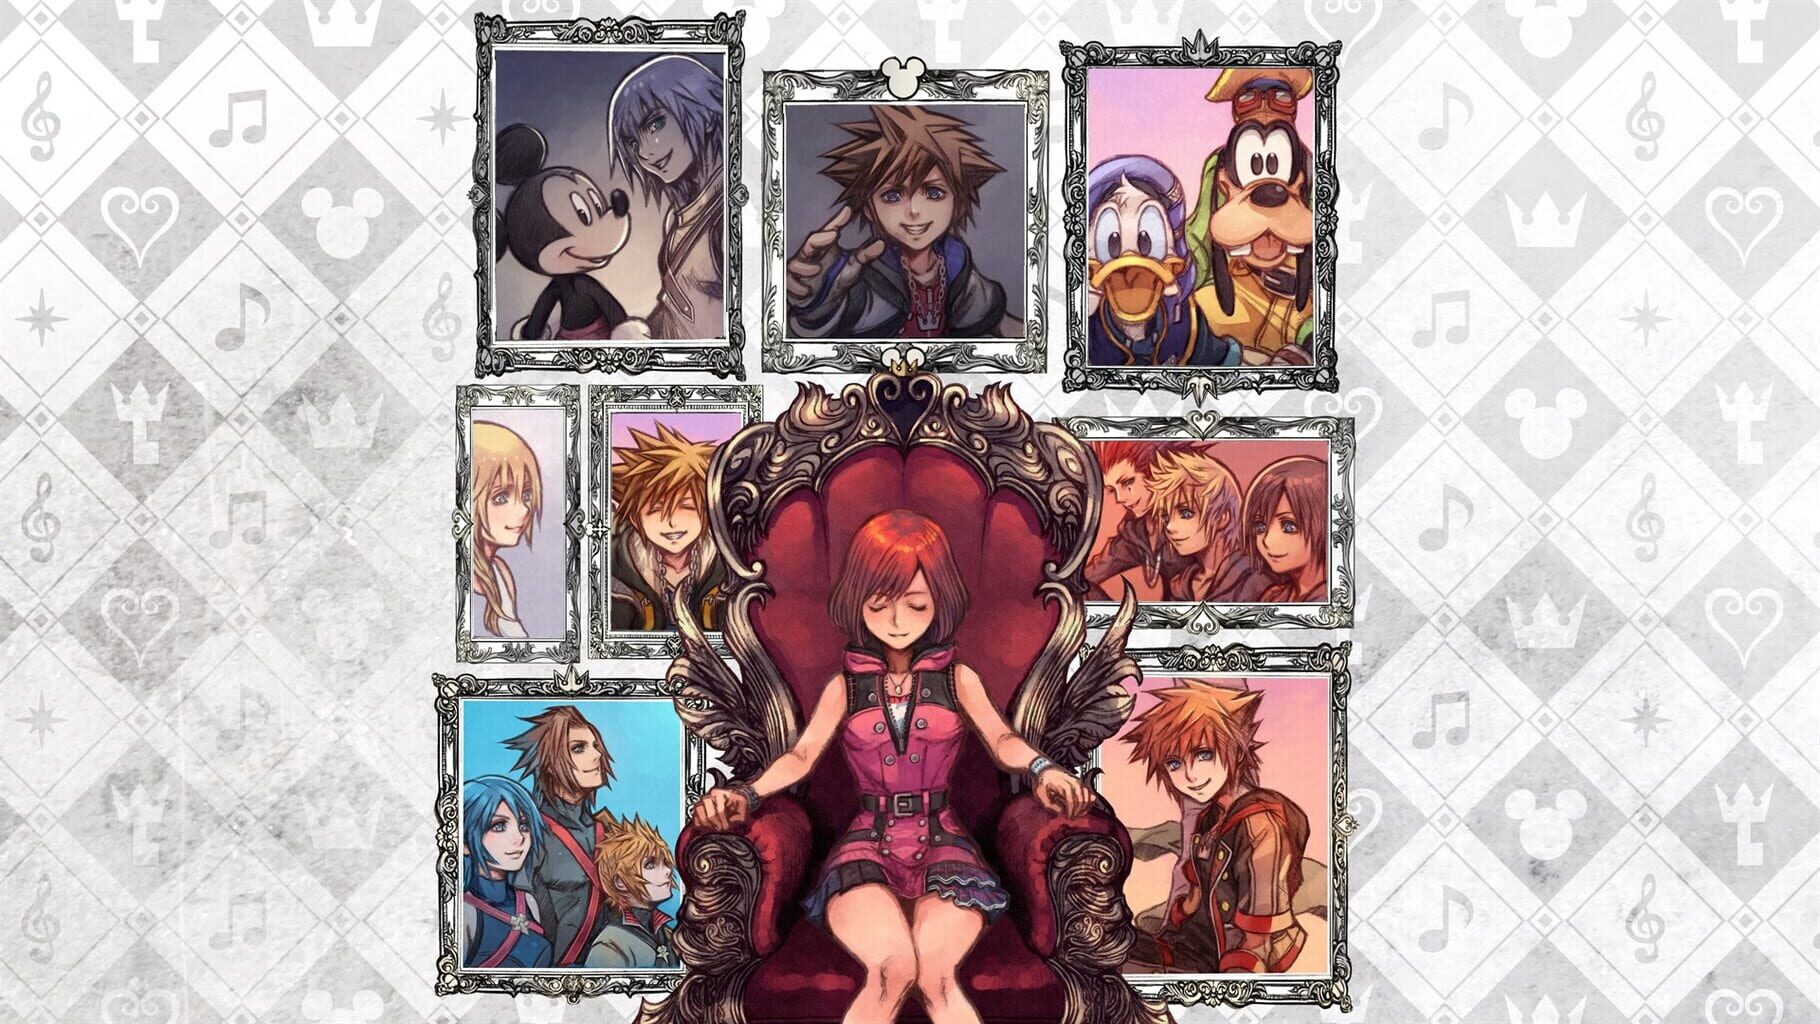 Kingdom Hearts: Melody of Memory artwork